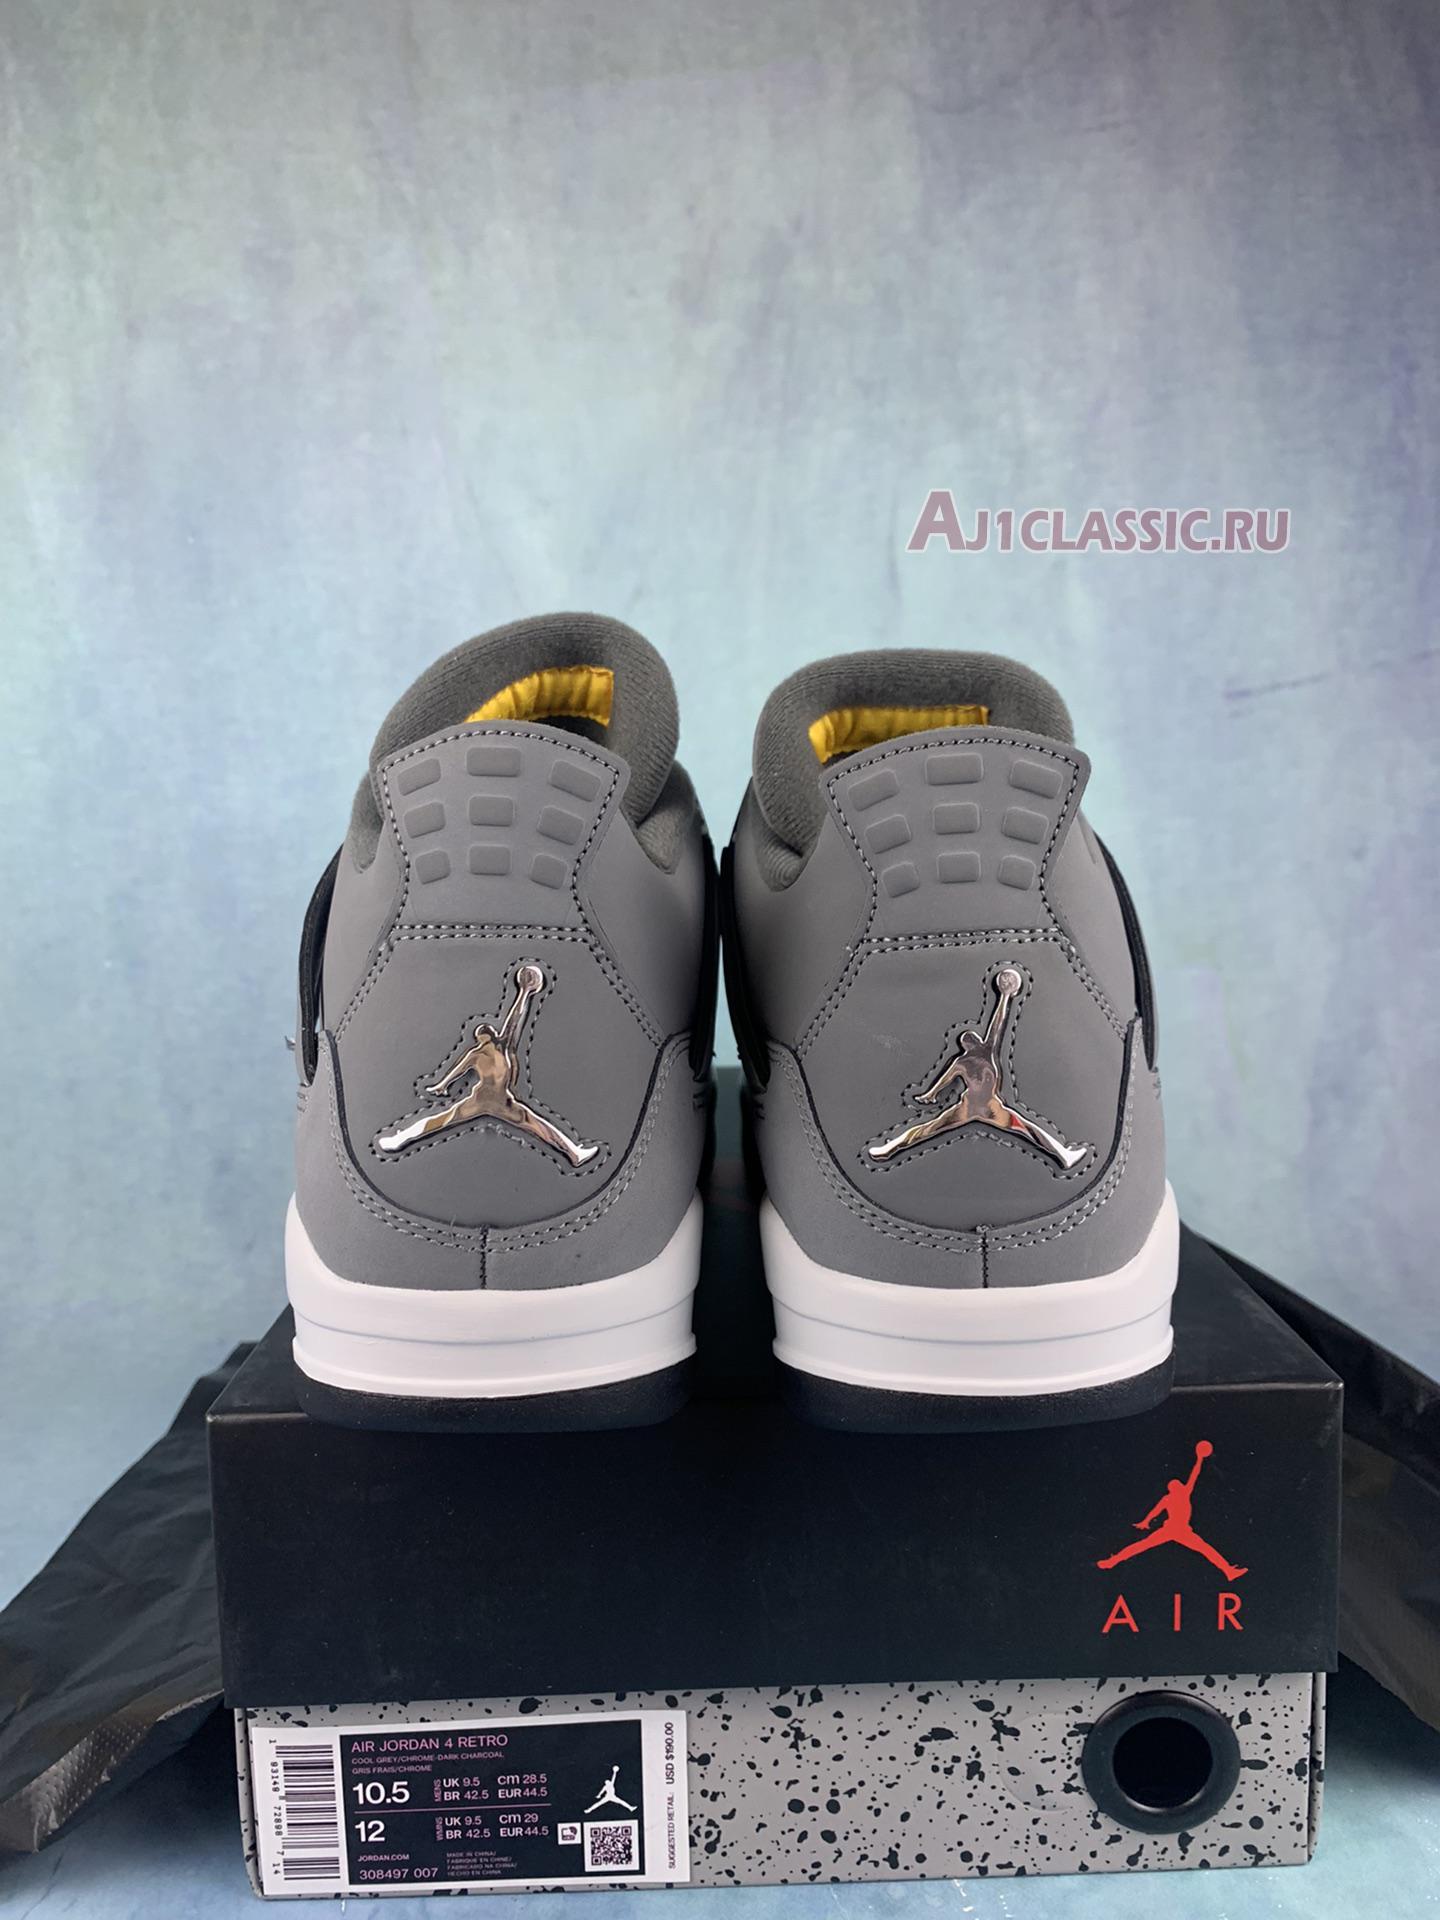 Air Jordan 4 Retro "Cool Grey" 308497-007-2